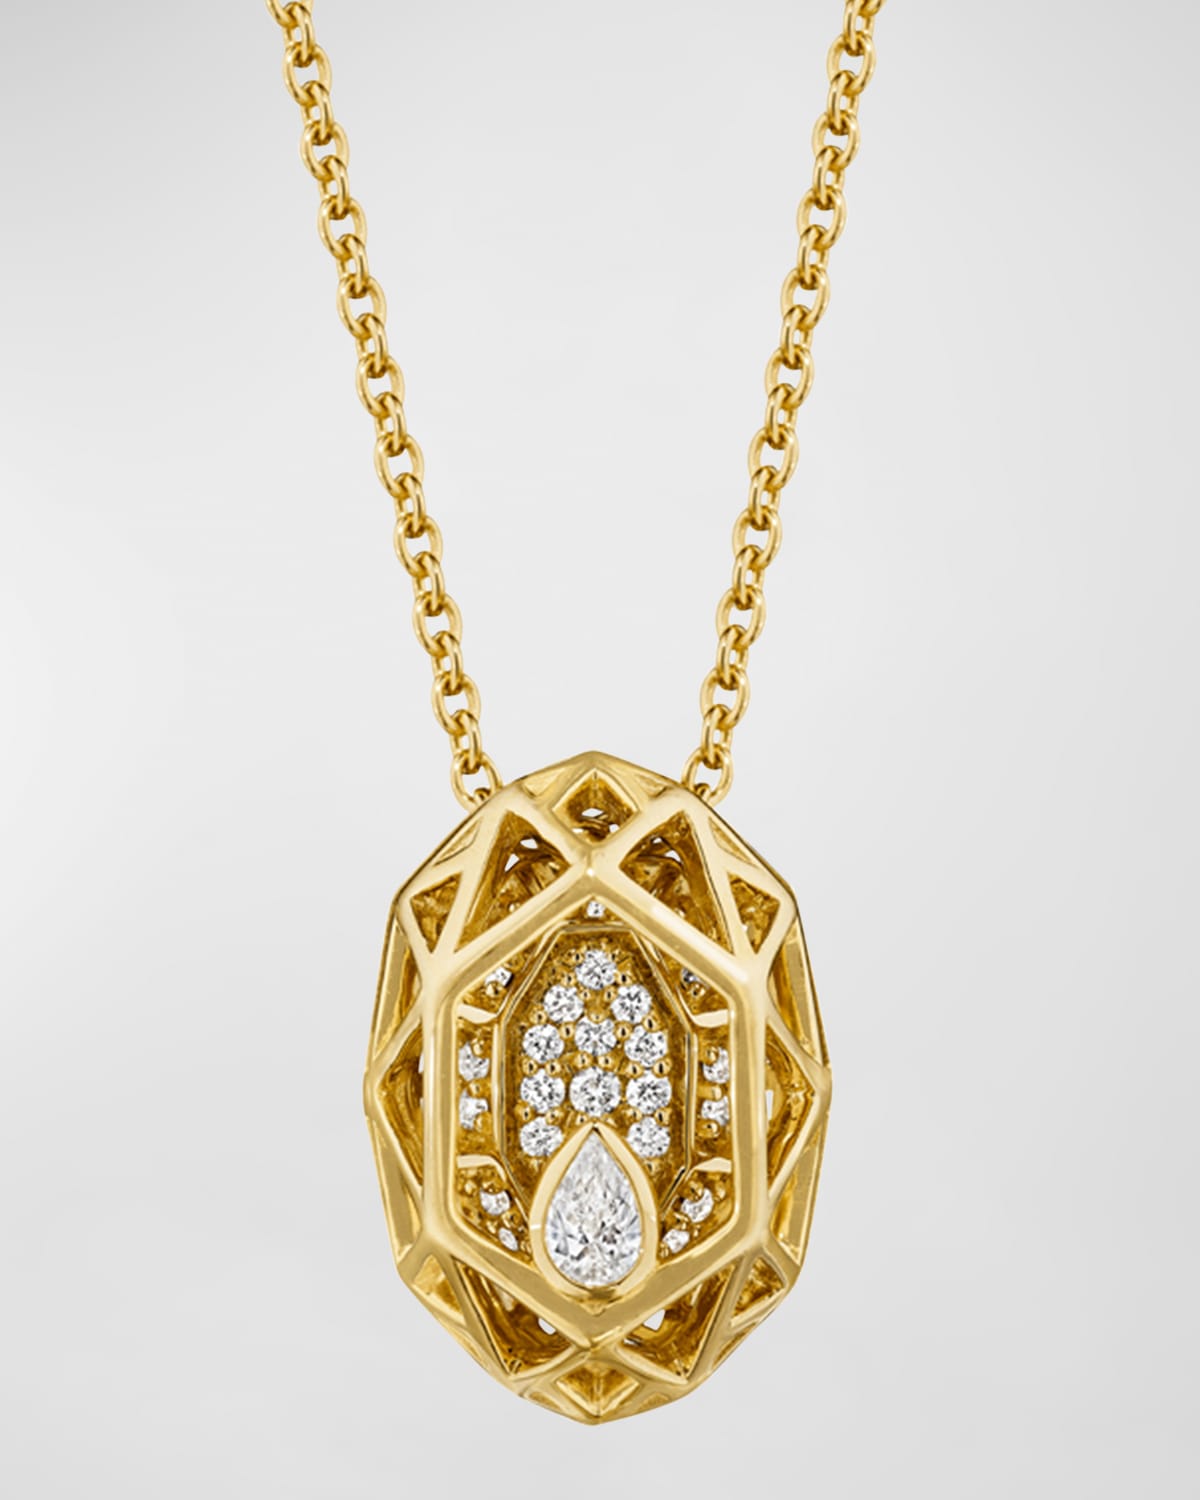 18K Estelar White Gold Pendant Necklace with Diamonds, 18"L